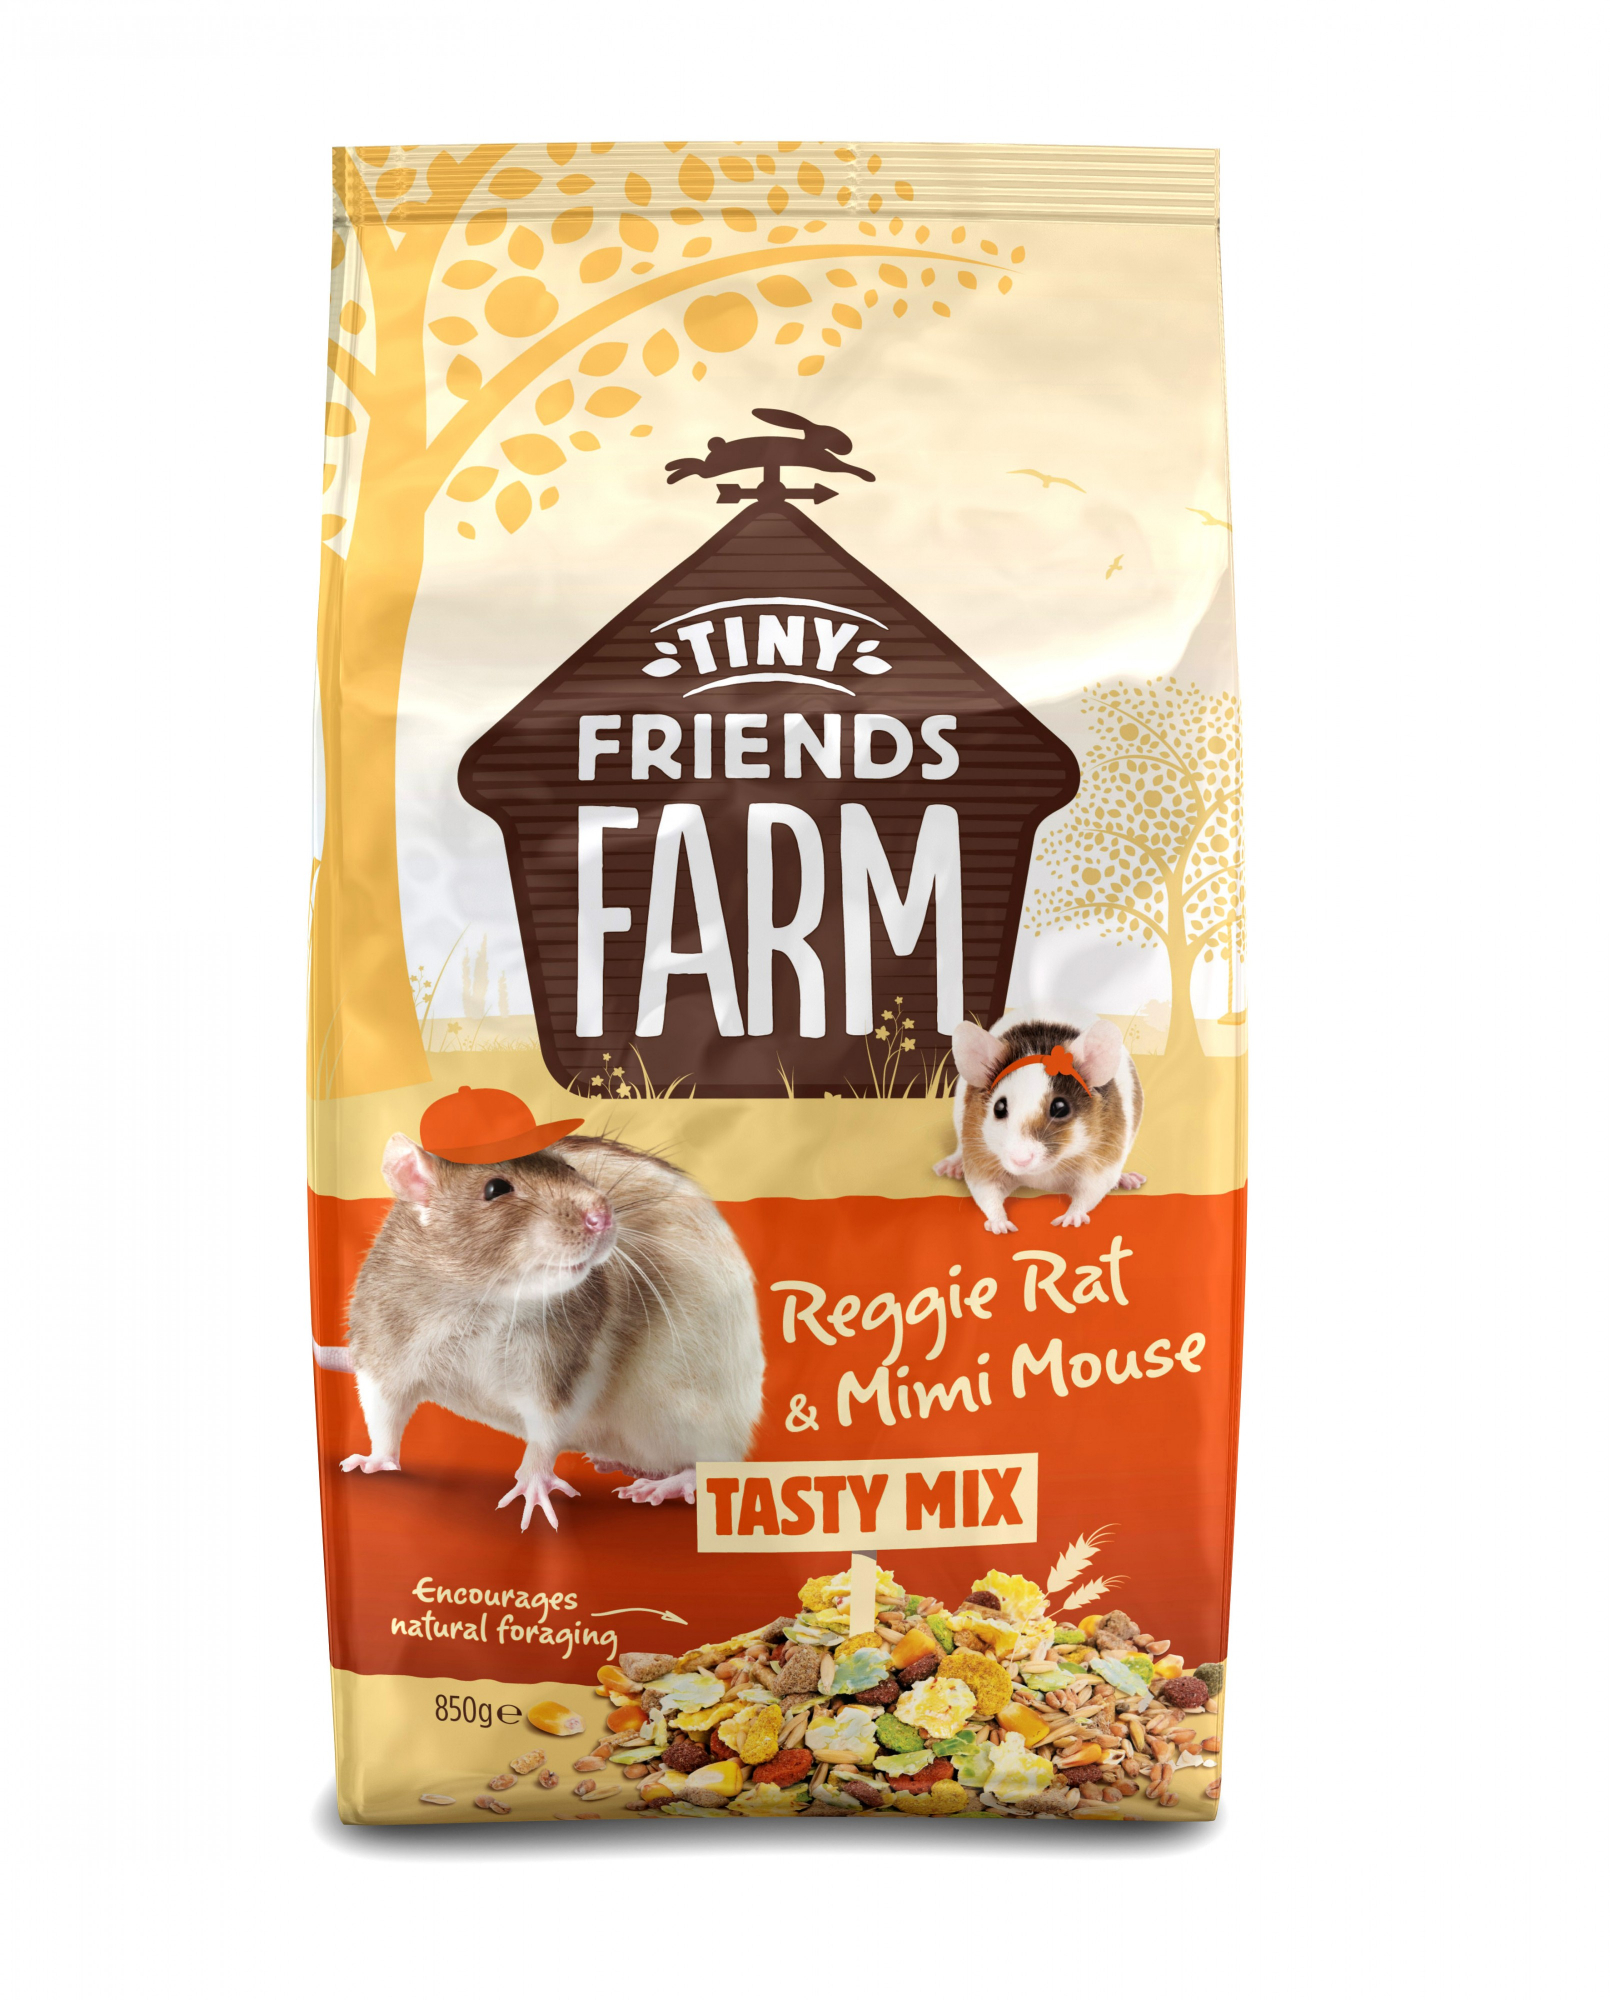 Tiny Friends Farm Tasty Mix comida para ratas y ratones